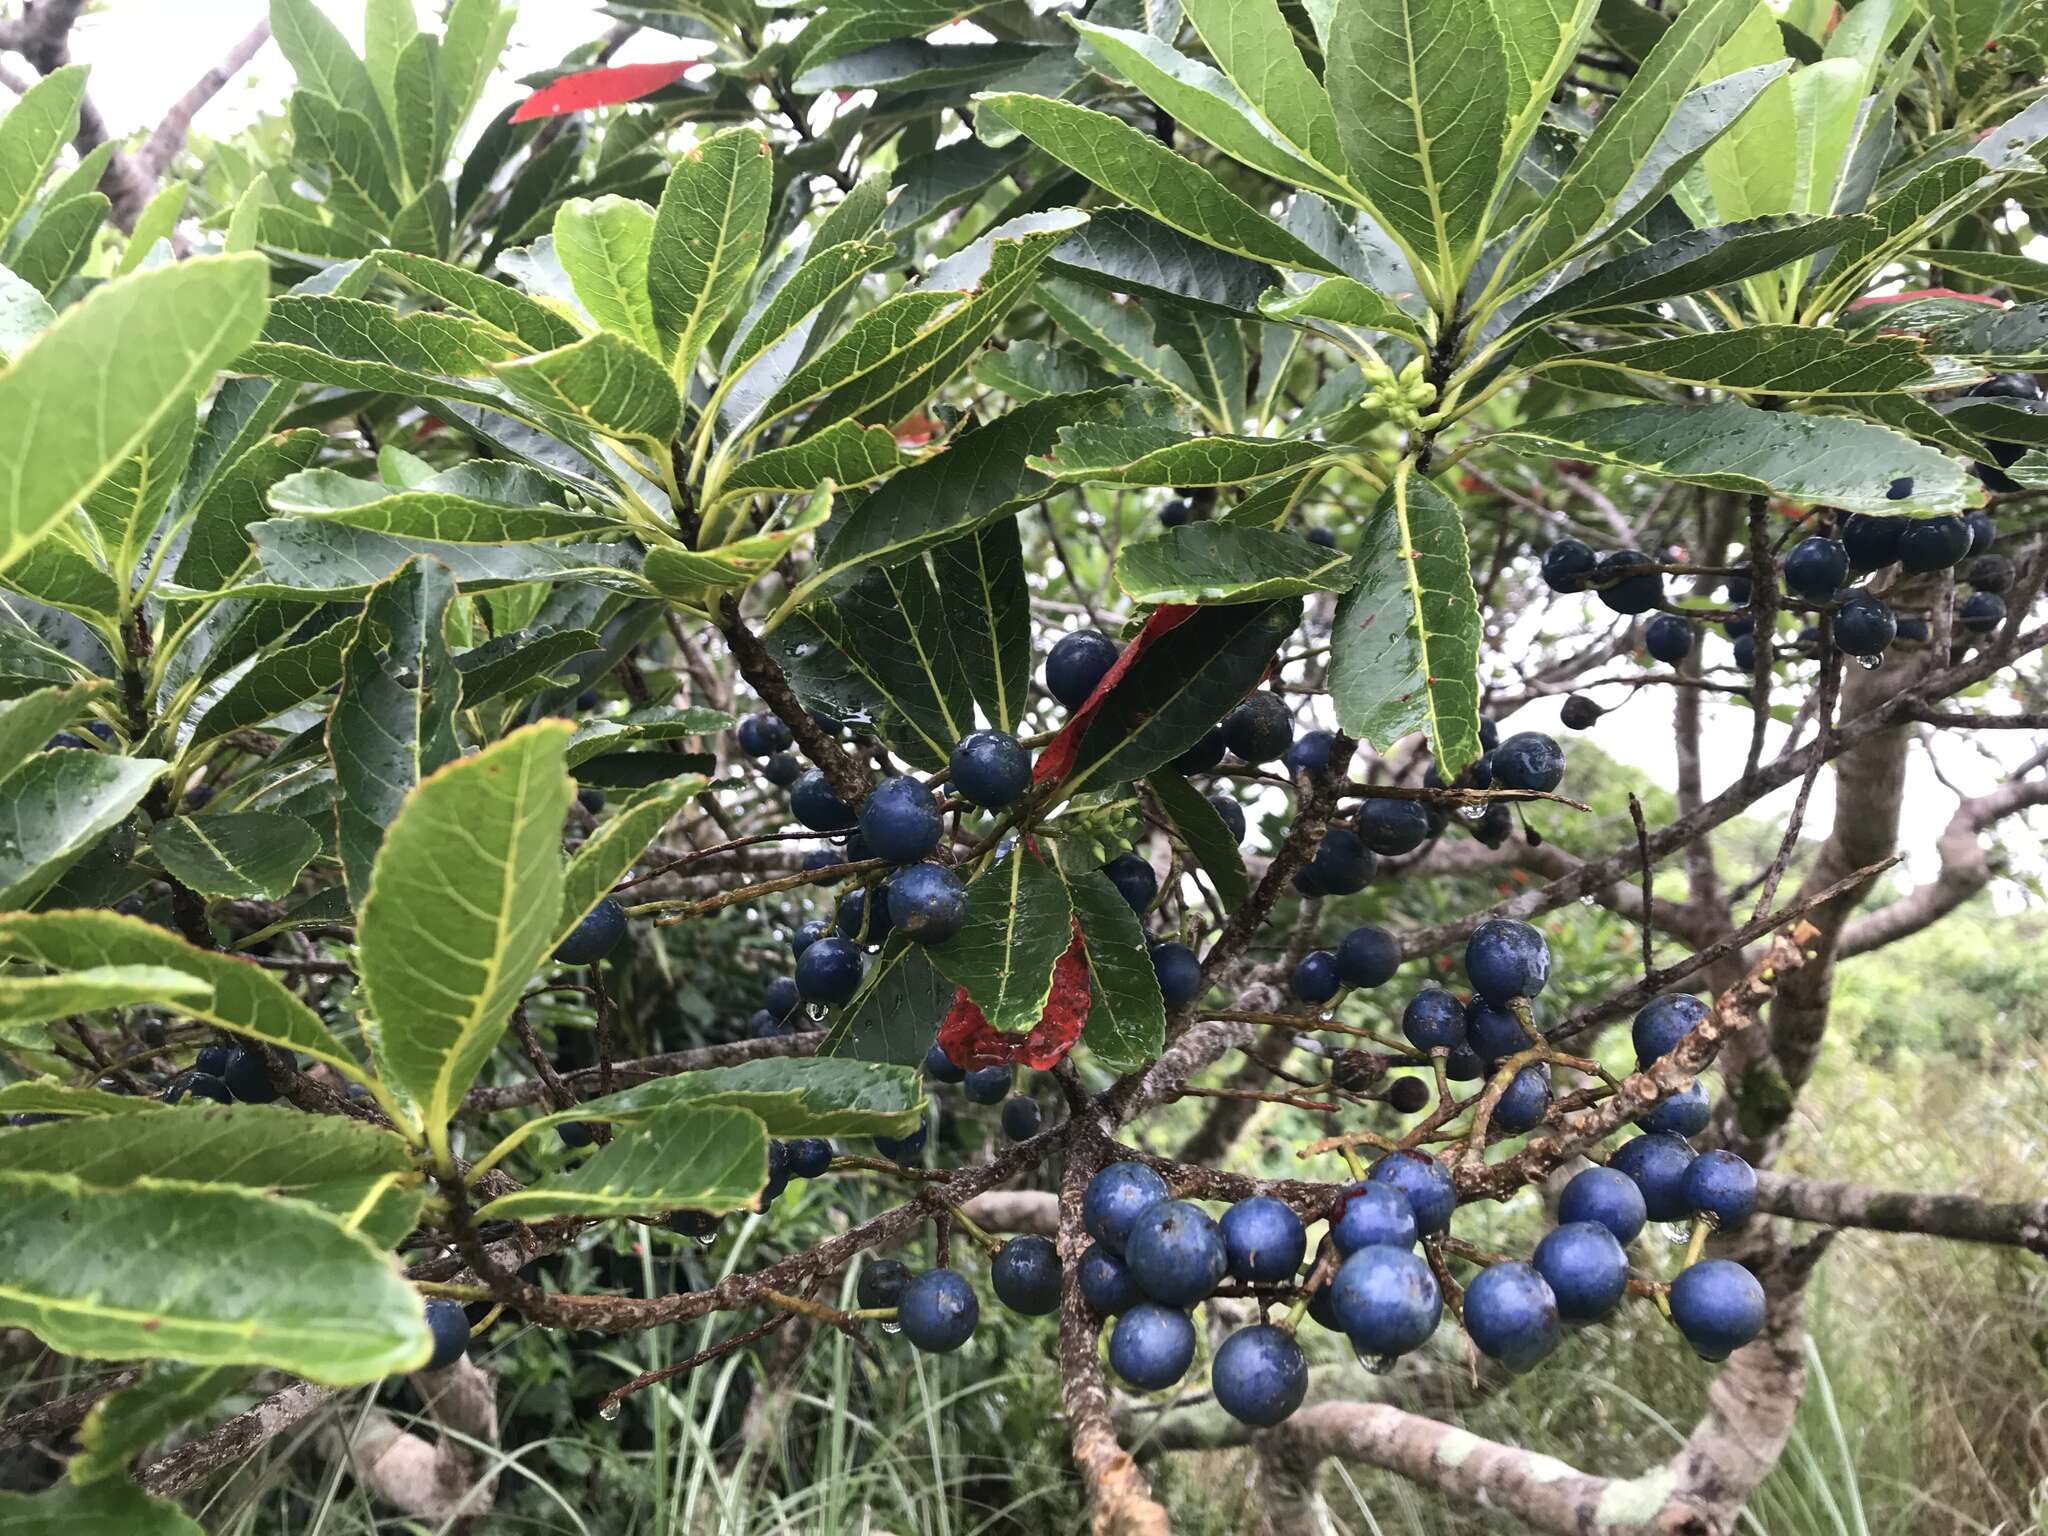 Image of Elaeocarpus joga Merrill